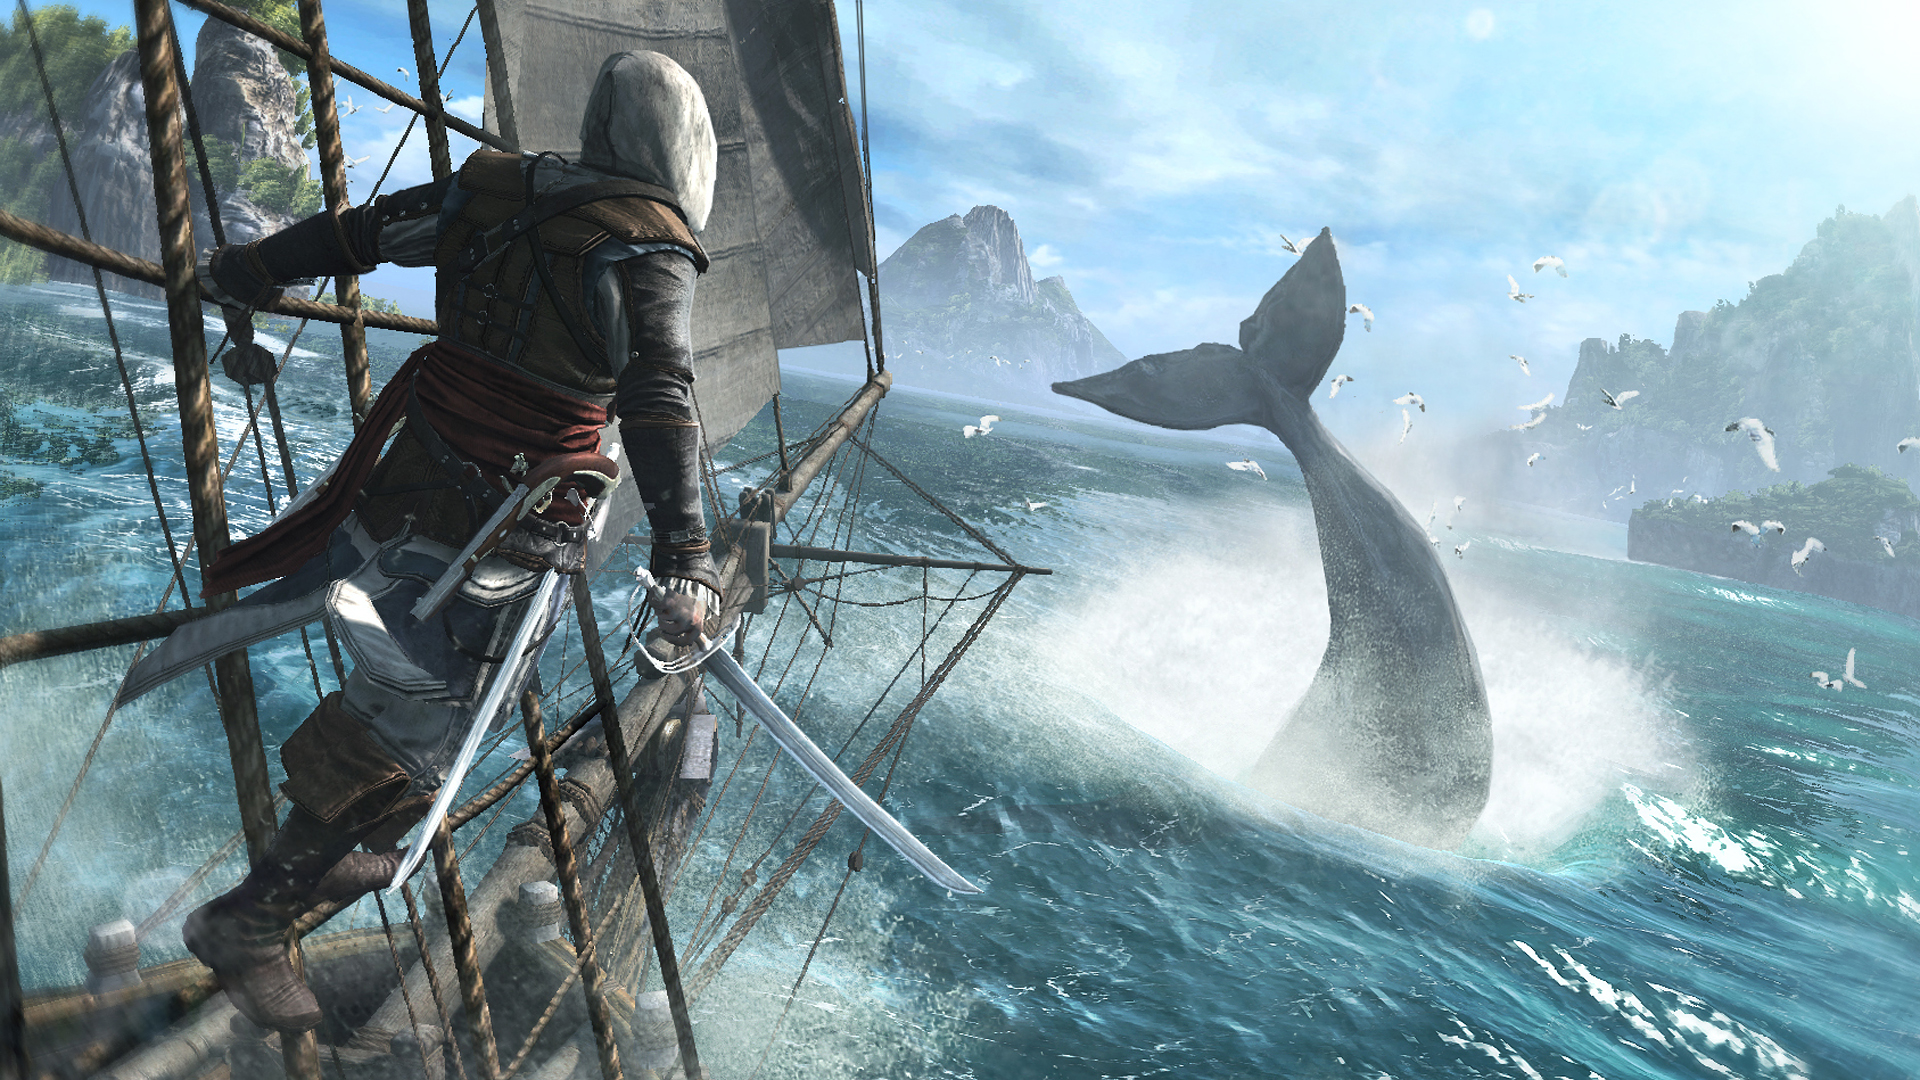 1. Assassin's Creed IV: Black Flag